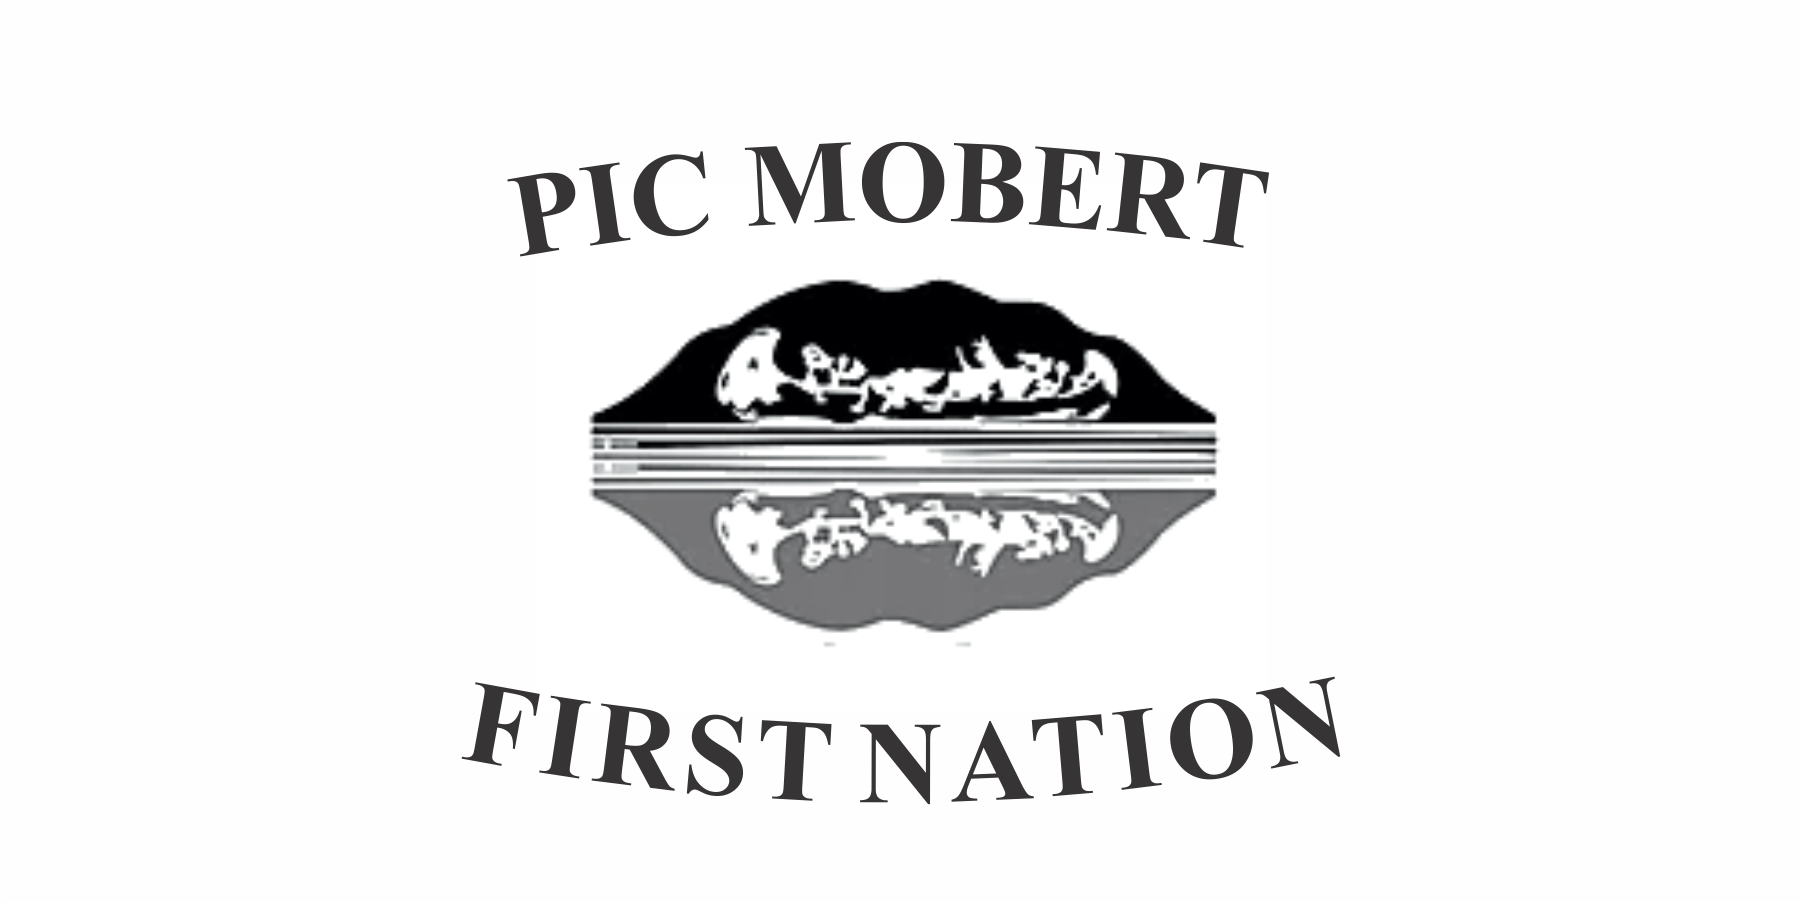 Pic Mobert First Nation logo